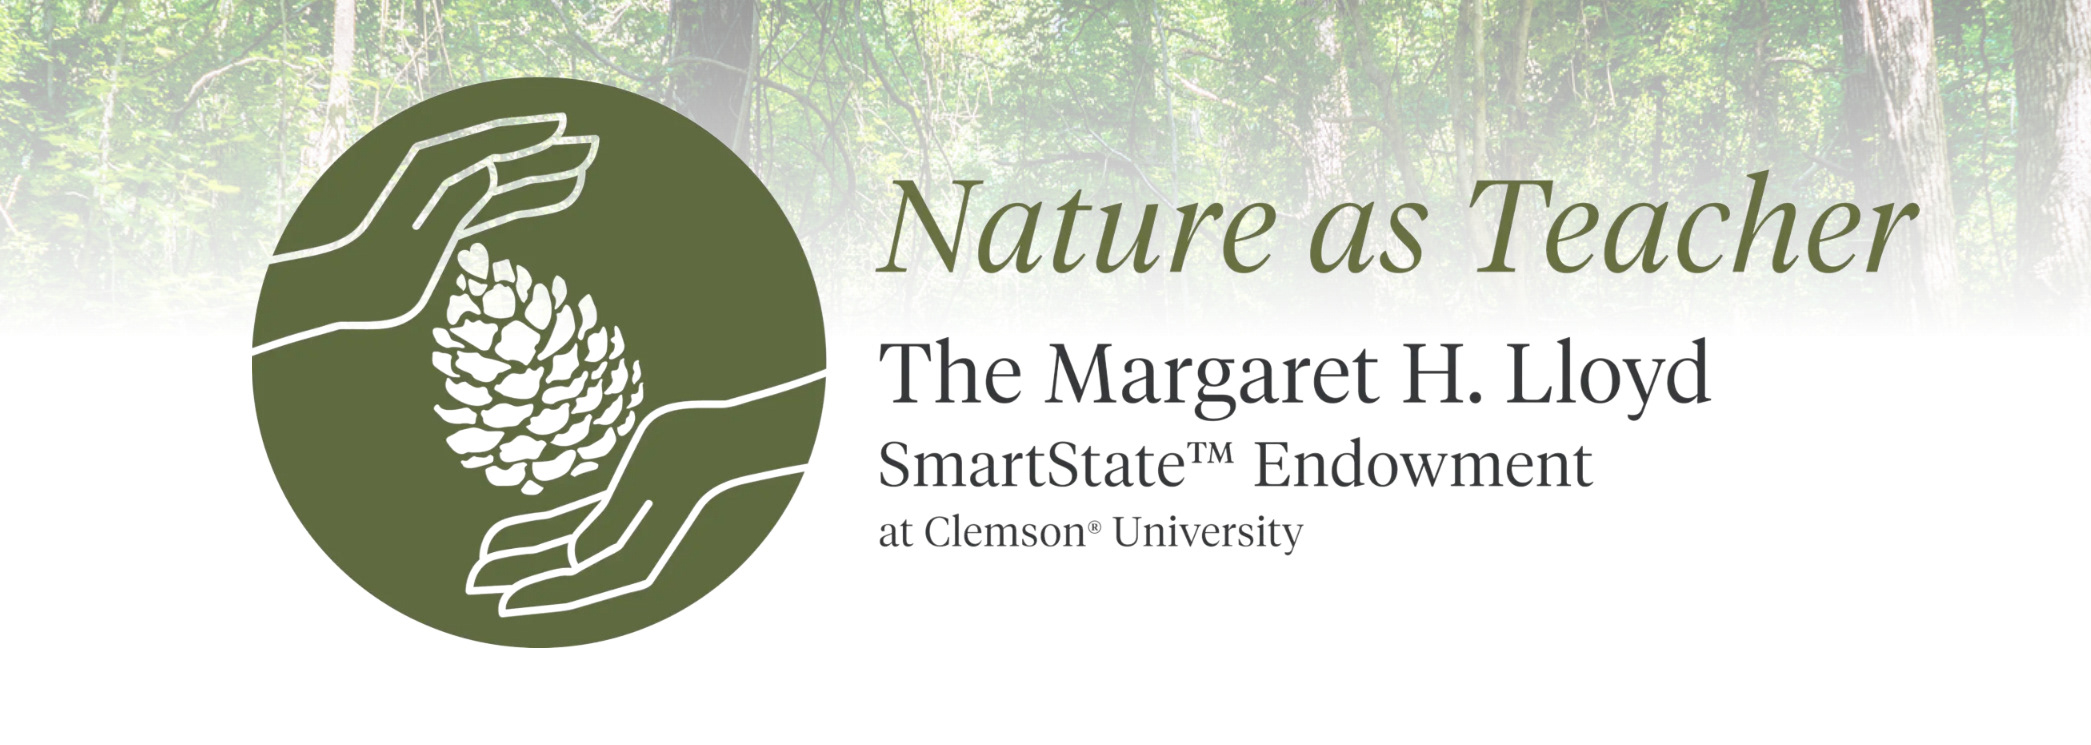 Nature as Teacher The Margaret H. Lloyd SmartState Endowment at Clemson University